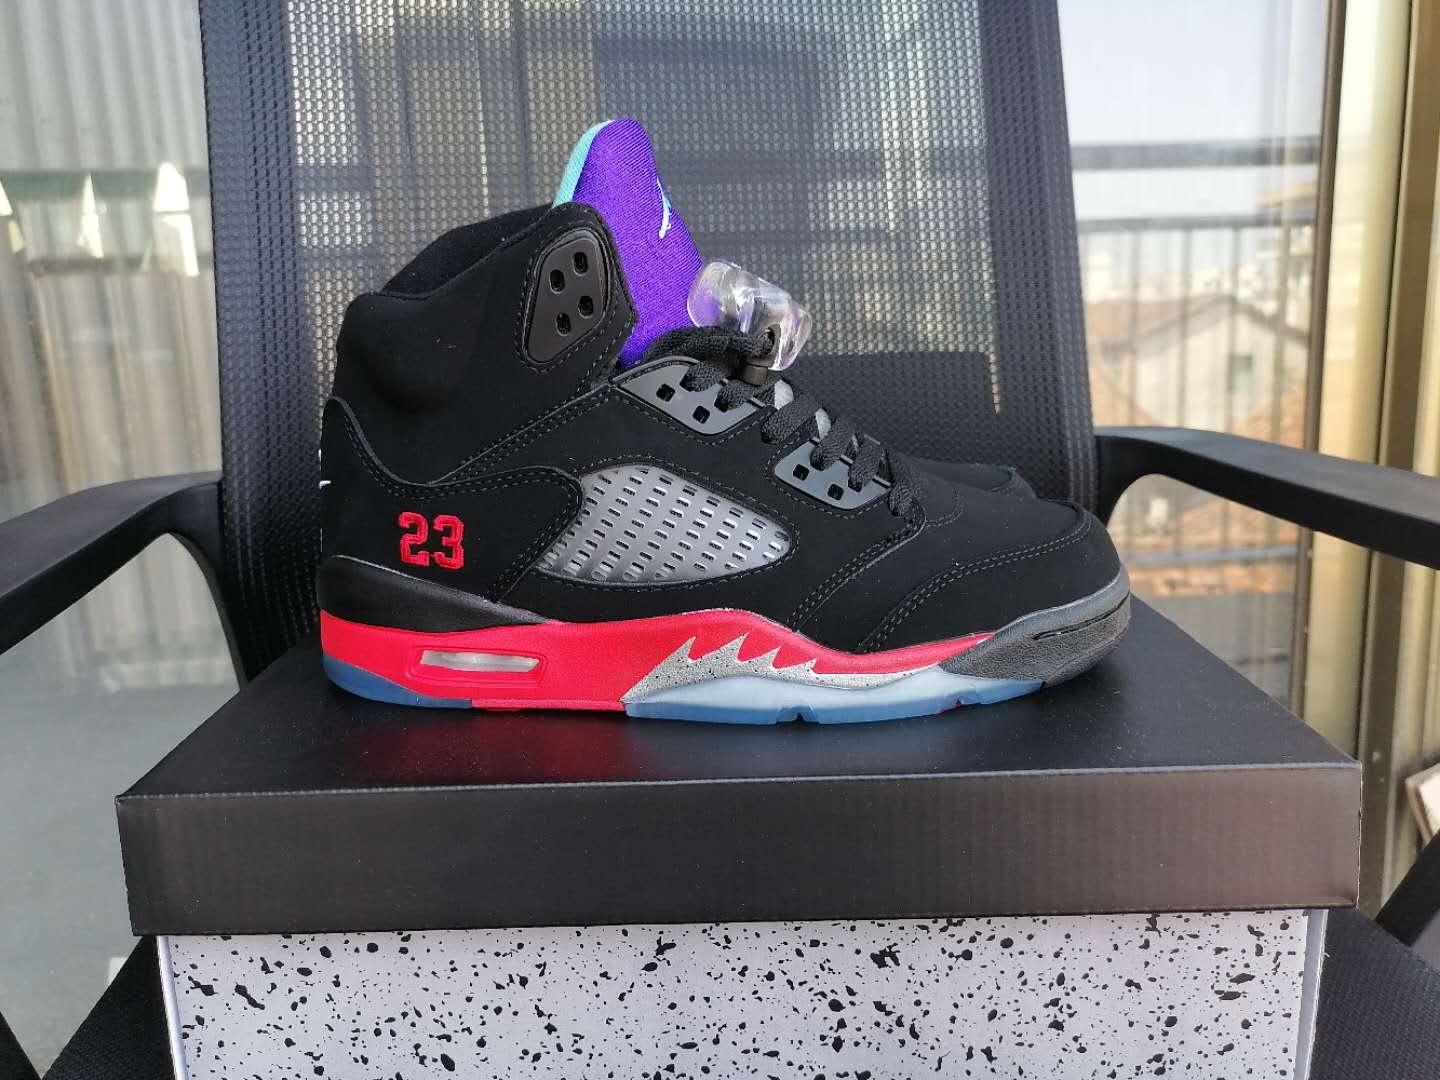 New Air Jordan 5 Black Red Purple Shoes